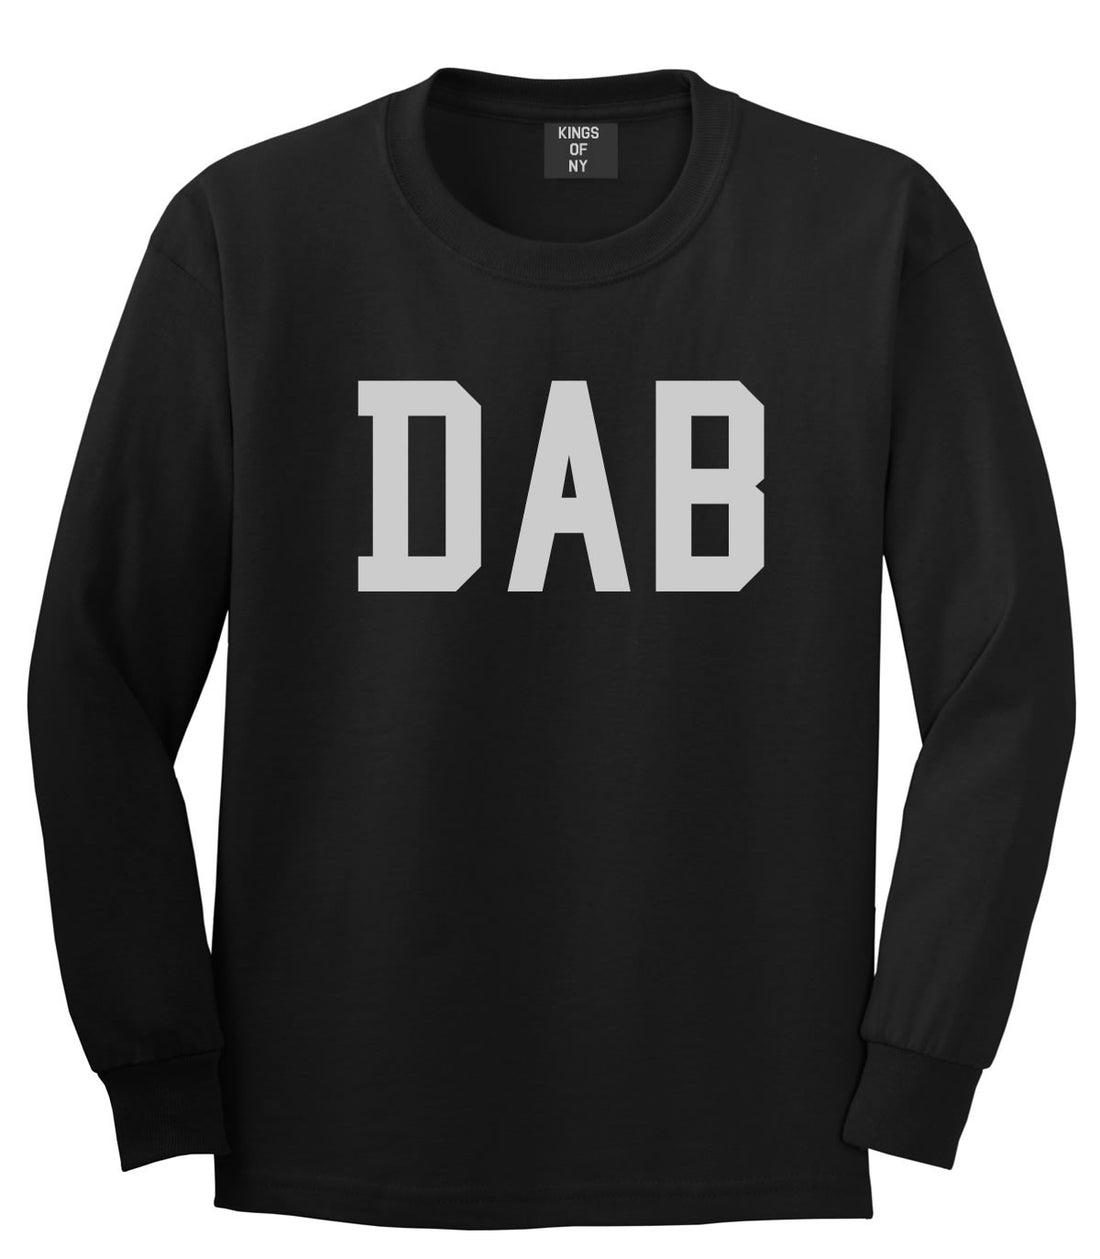 Dab Long Sleeve T-Shirt by Kings Of NY